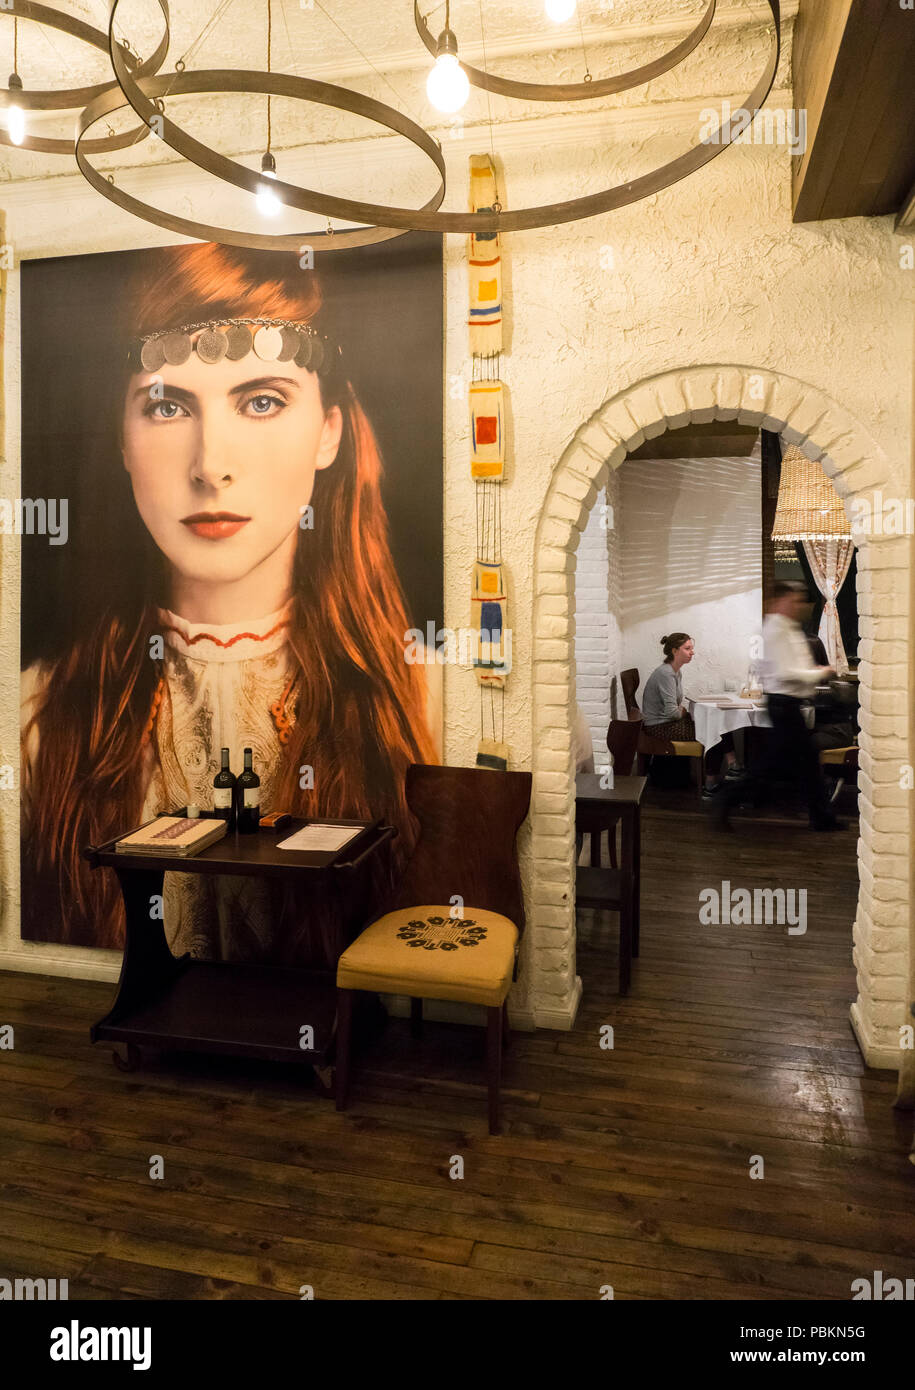 Moma Restaurant in Sofia, Bulgaria Stock Photo - Alamy